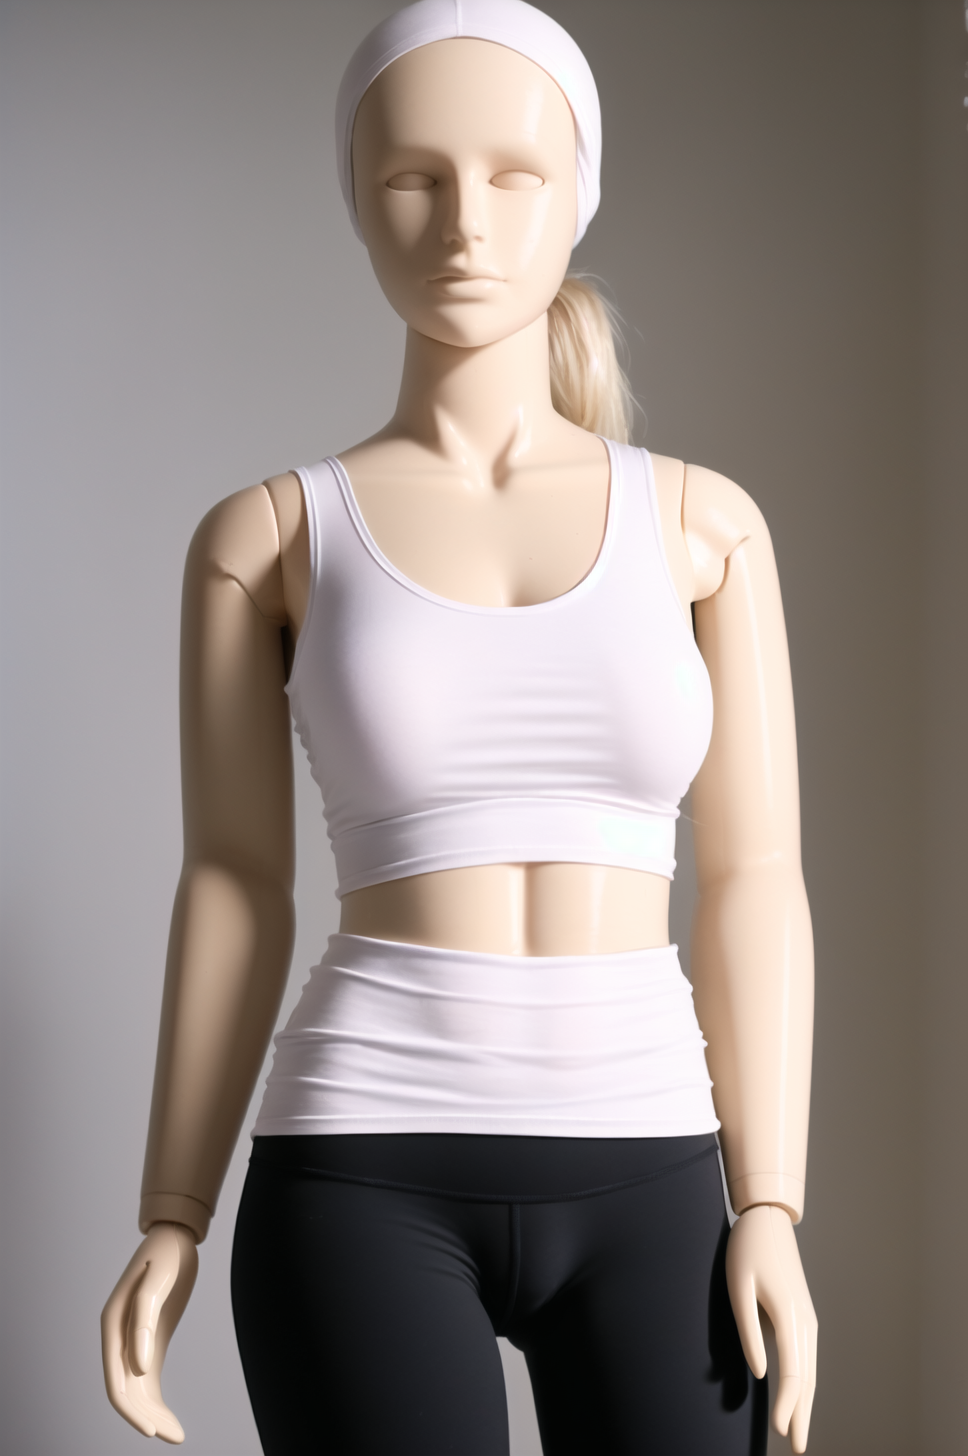 AI Art Generator: Skin tight yoga pants, thin white shirt